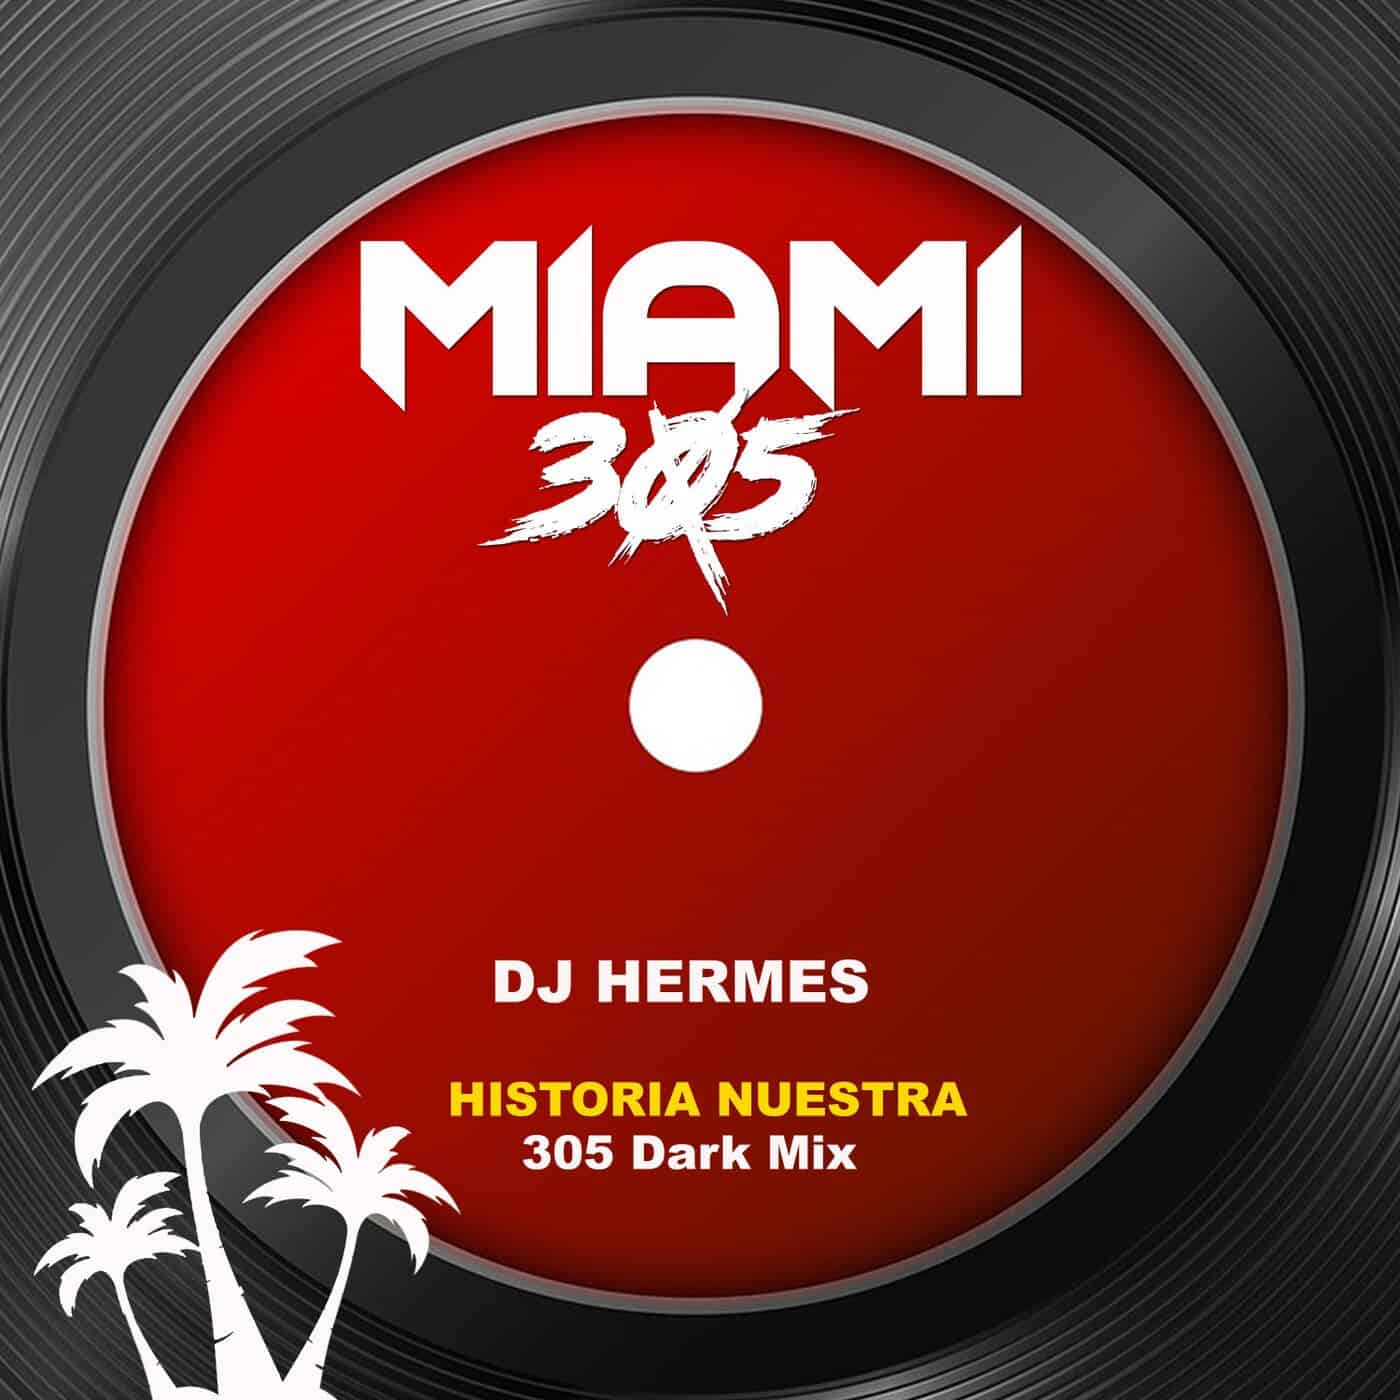 image cover: DJ Hermes - Historia Nuestra (305 Dark Mix) on Miami 305